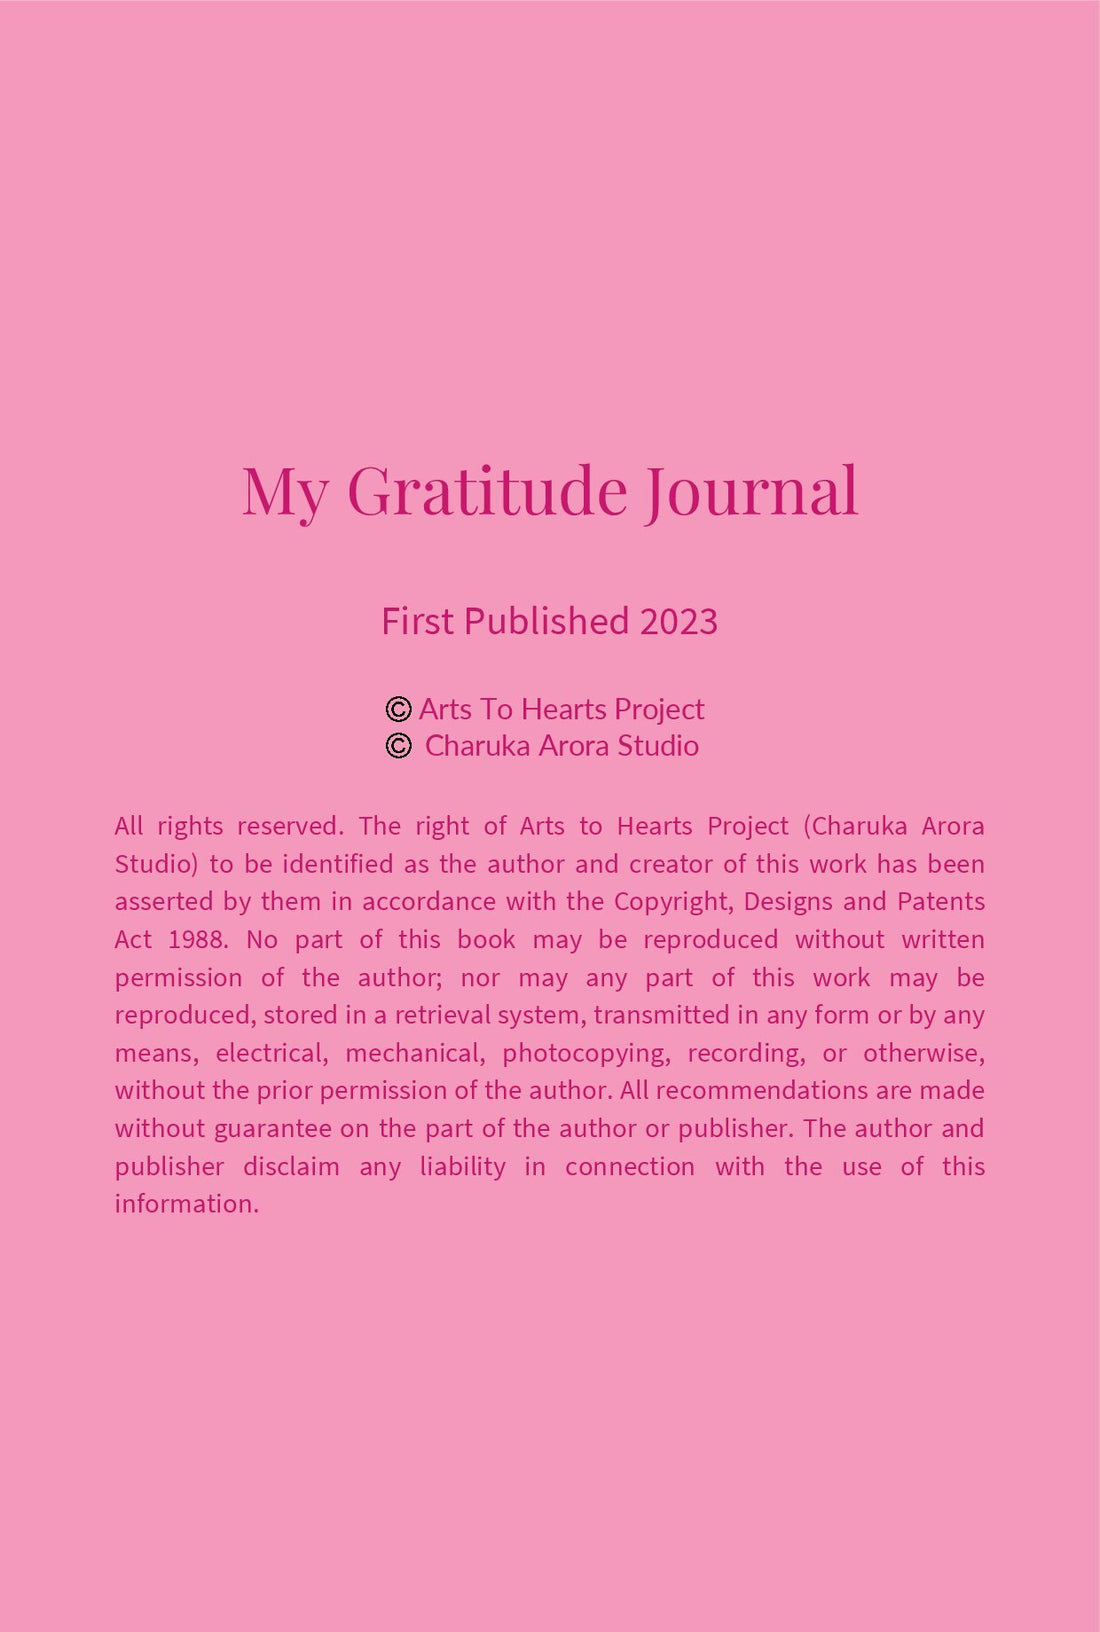 Mon journal de gratitude